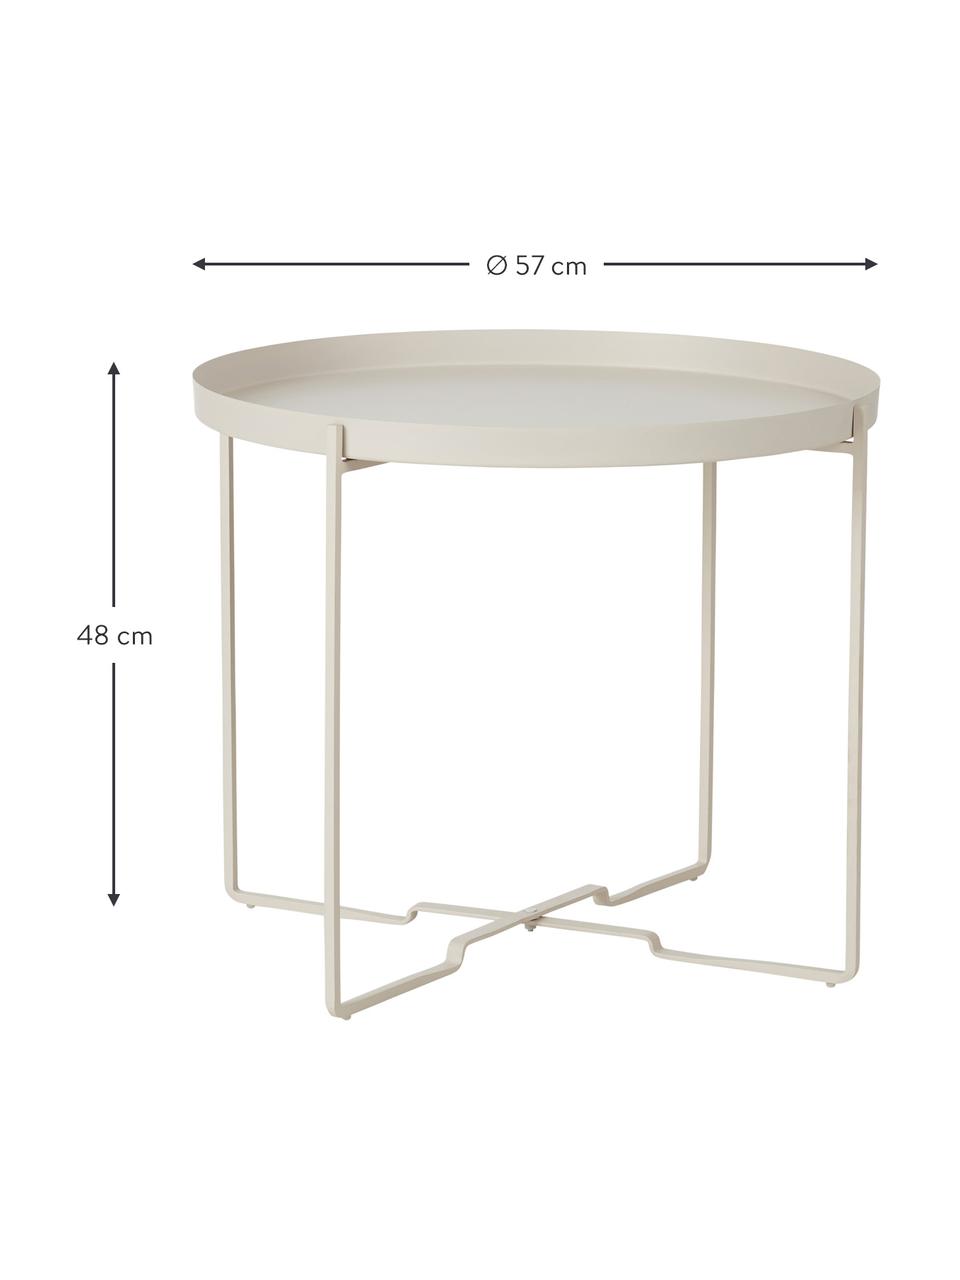 Kulatý kovový odkládací stolek George, Potažený kov, Krémově bílá, Ø 57 cm, V 48 cm